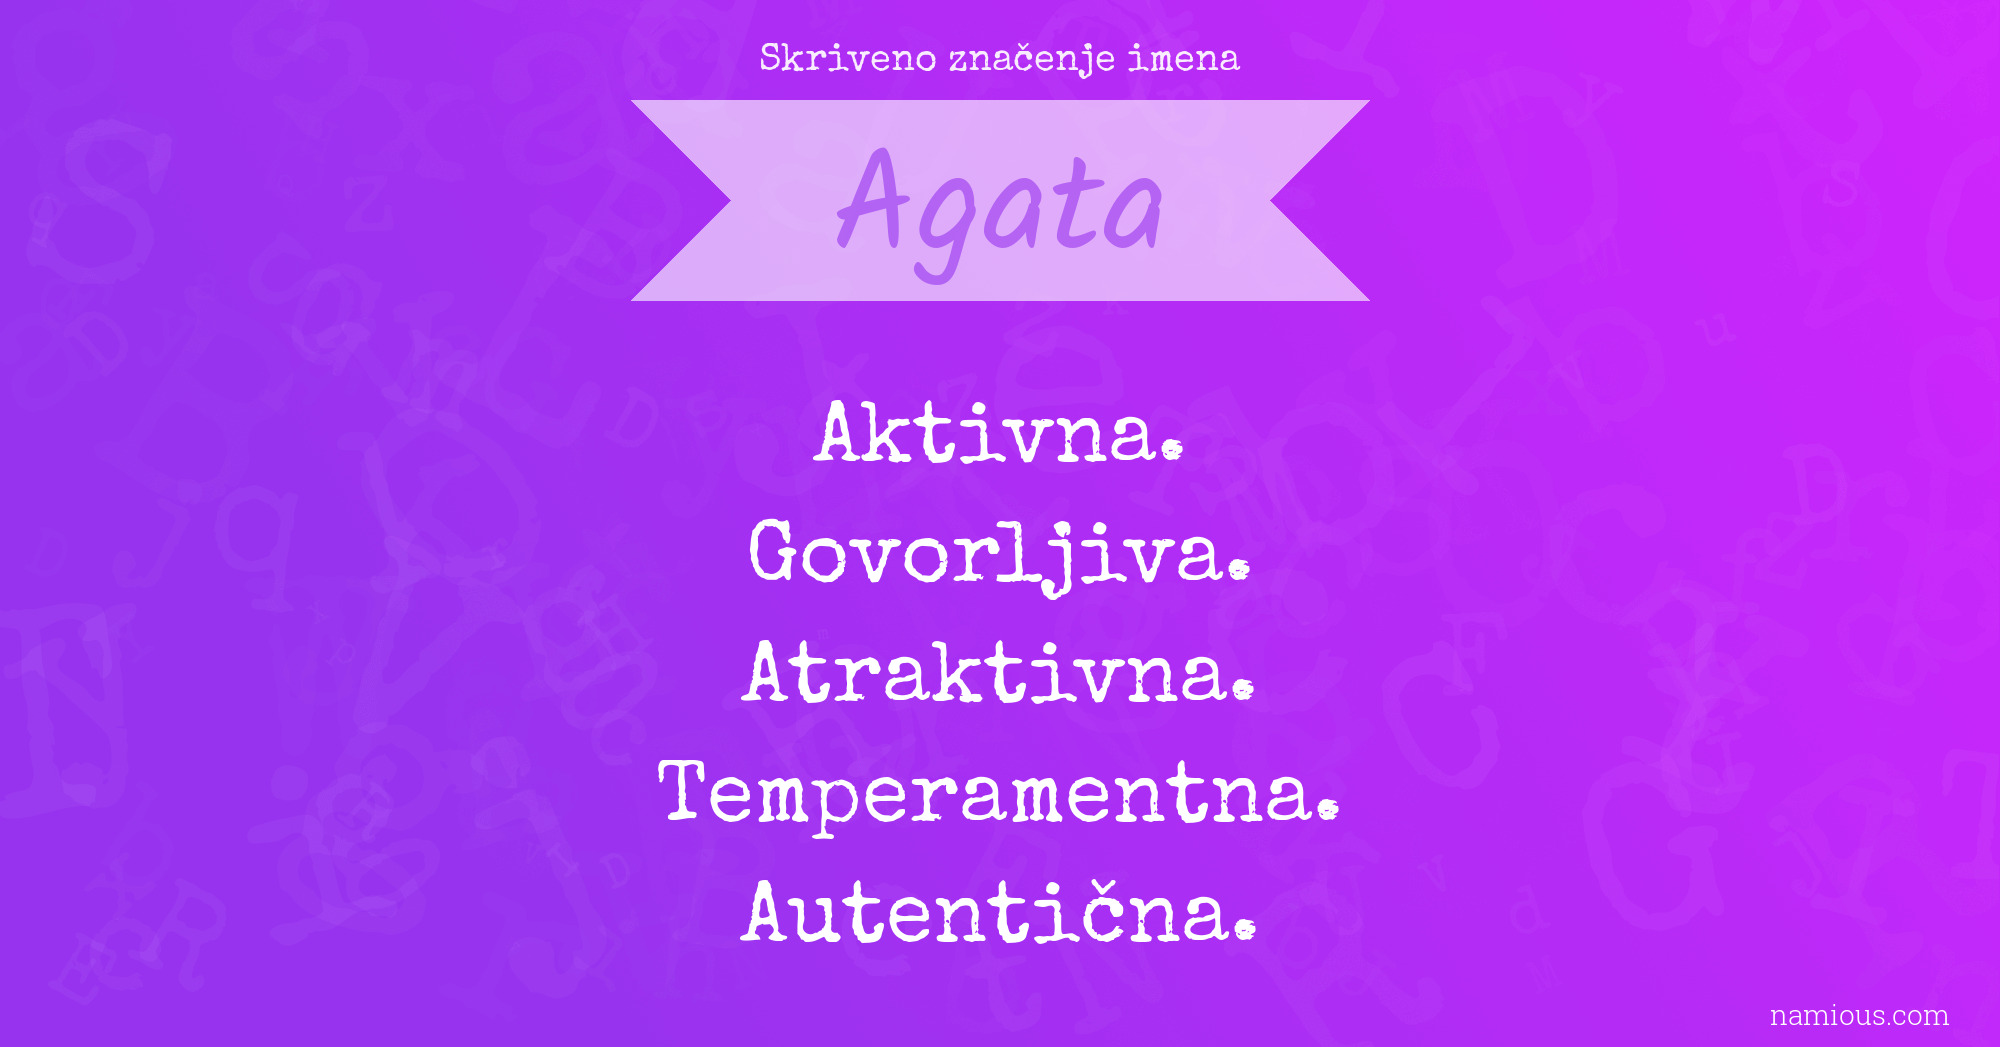 Skriveno značenje imena Agata